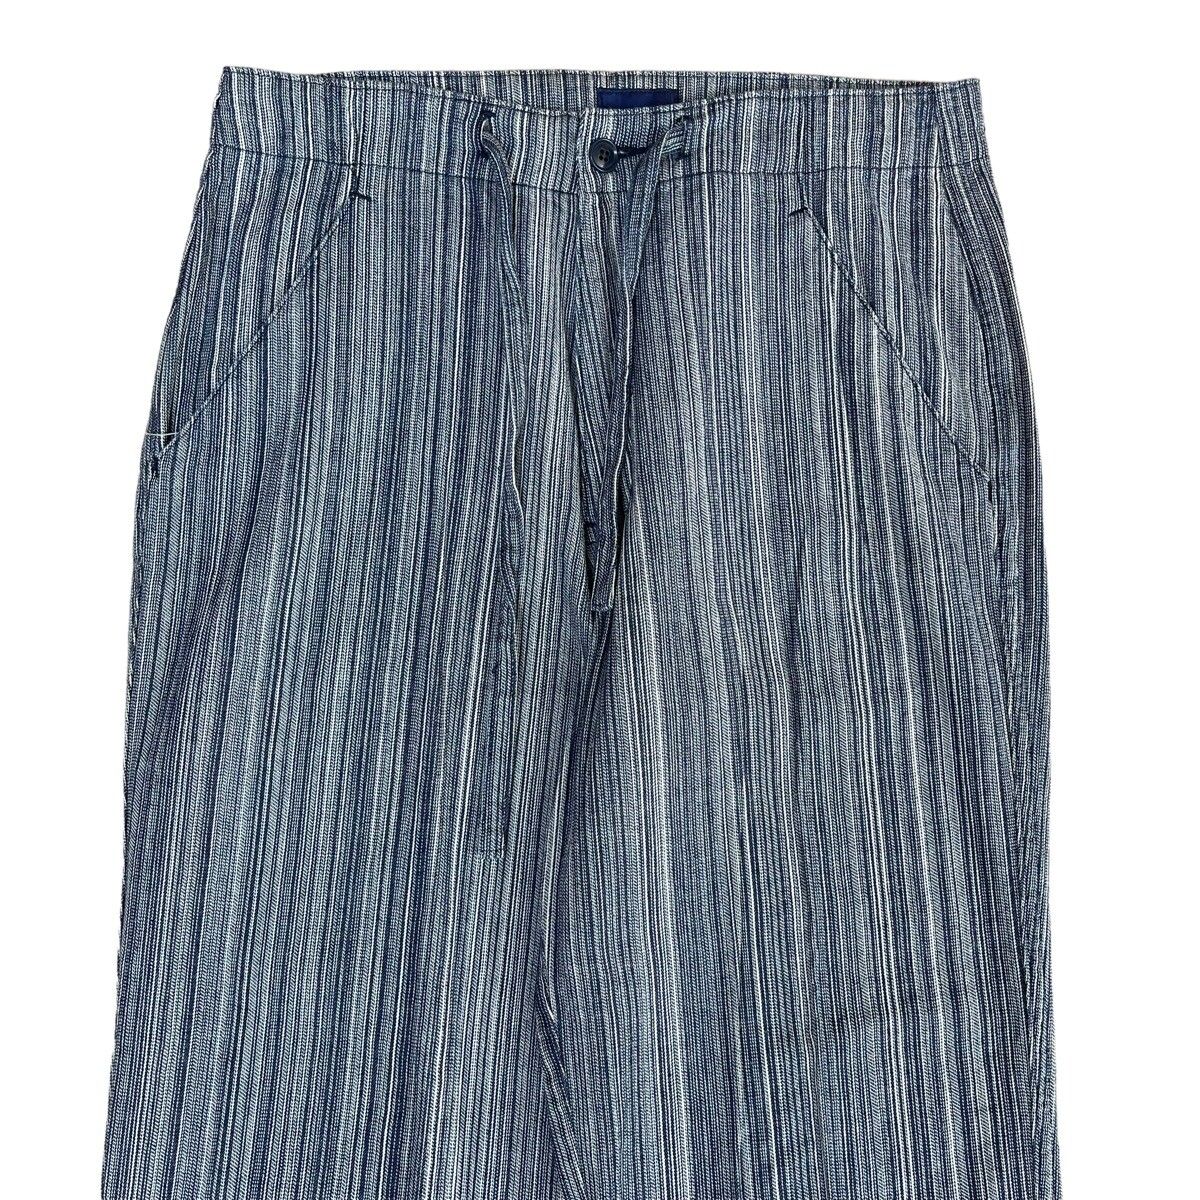 Beams Japan Inspired Kapital Style Pants Size 31 - 3